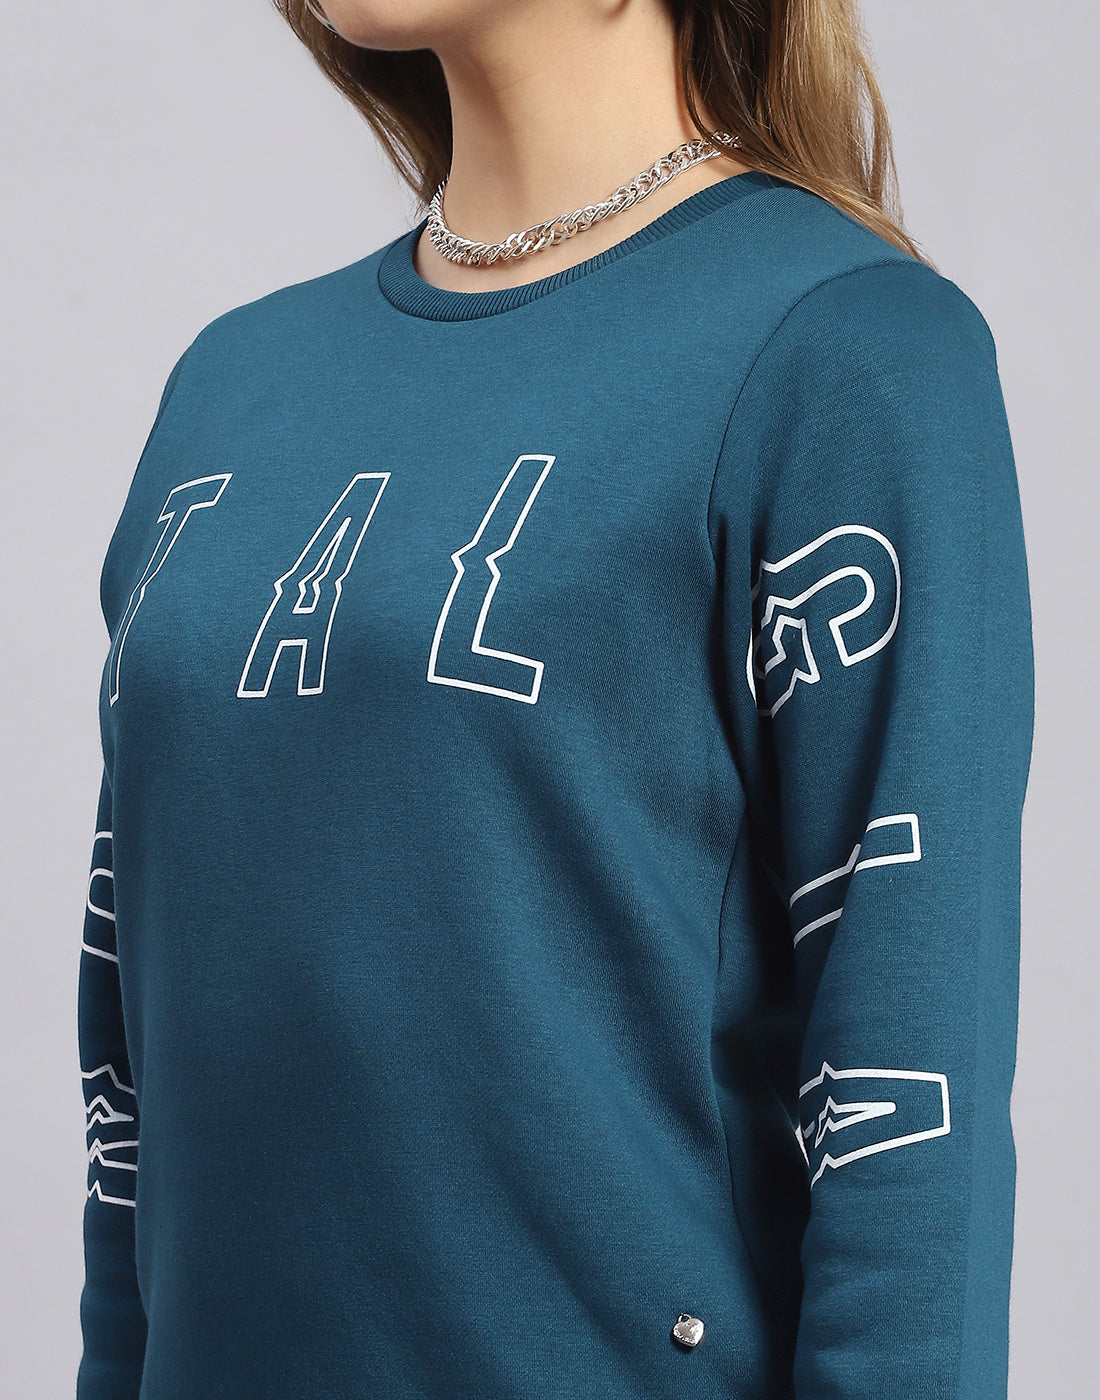 Women Teal Blue Printed Round Neck Full Sleeve Sweatshirt